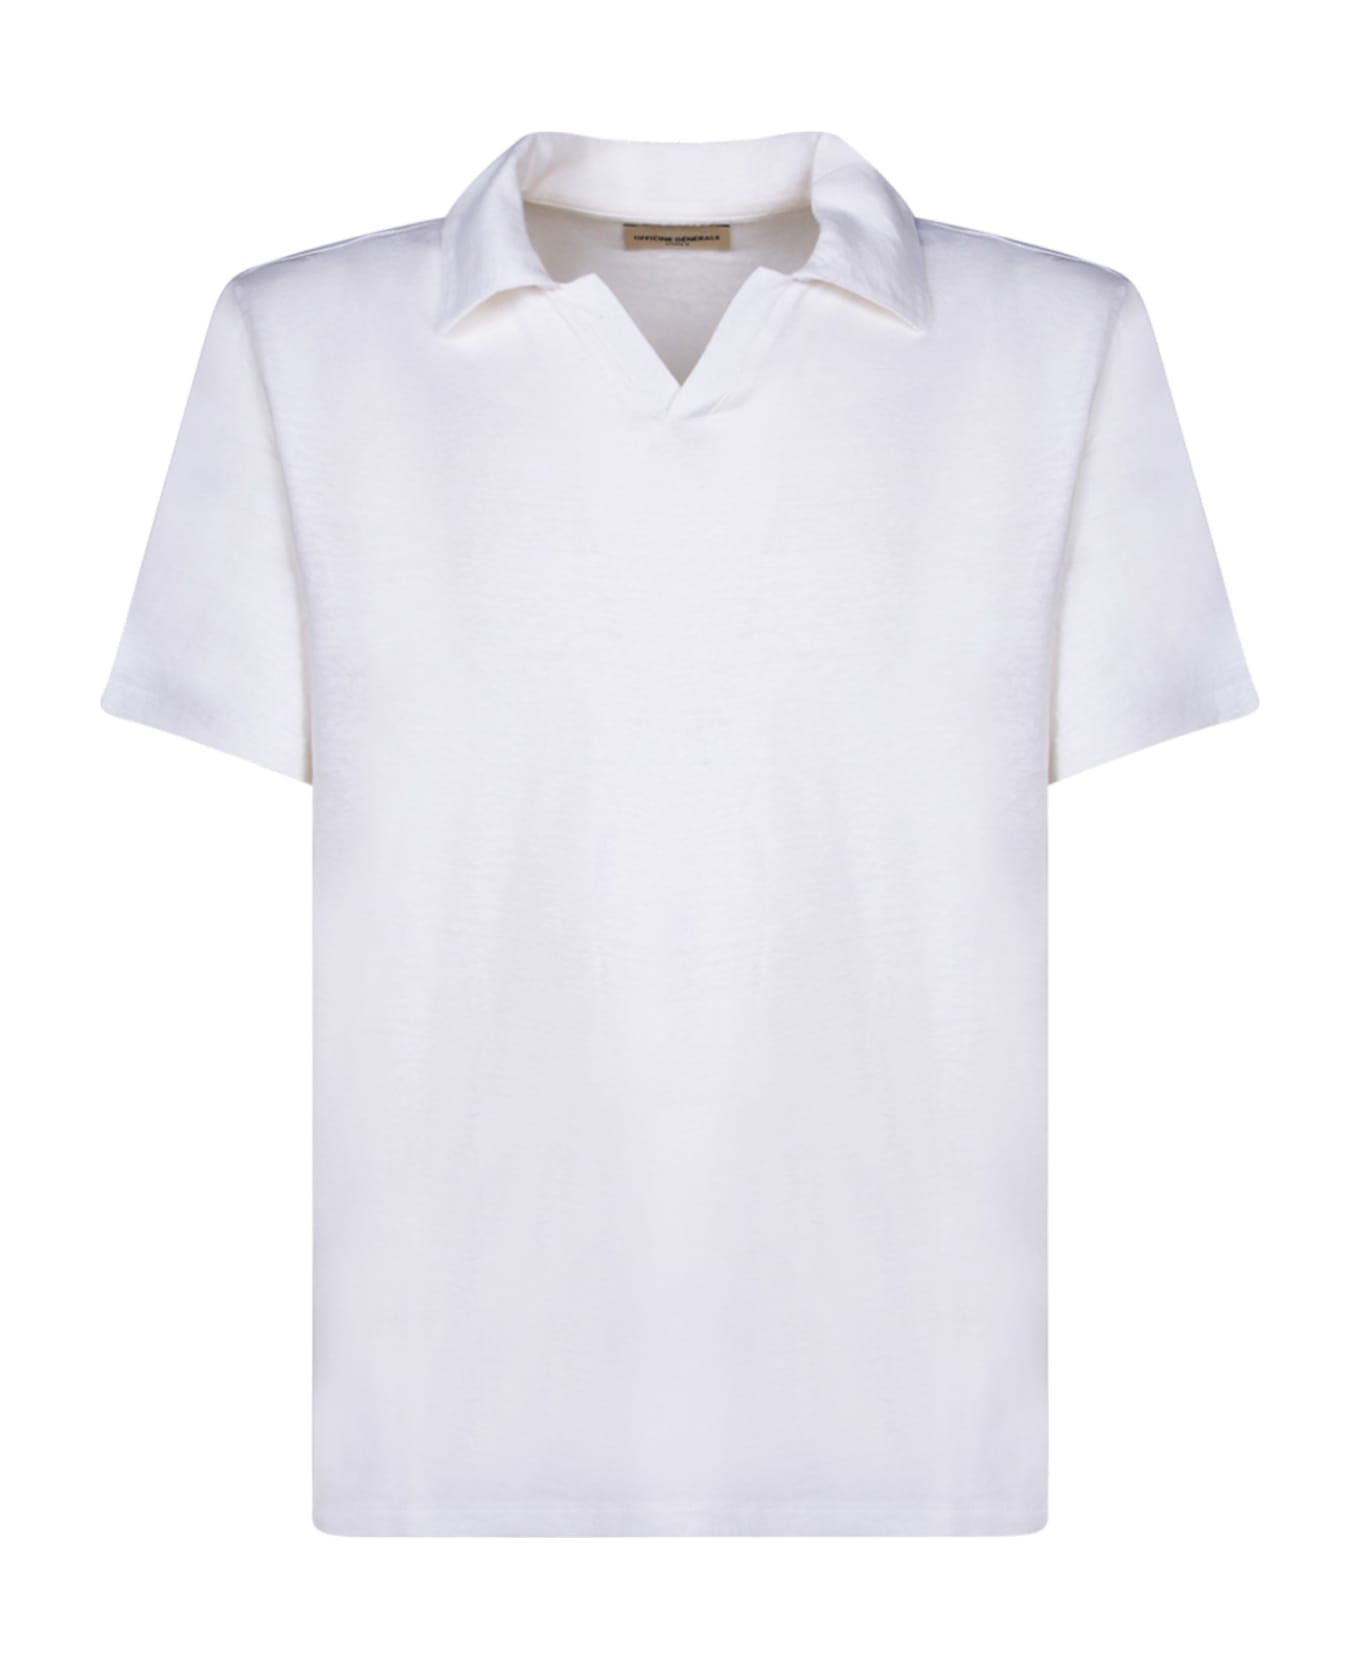 Officine Générale Short Sleeves White Polo Shirt - White ポロシャツ